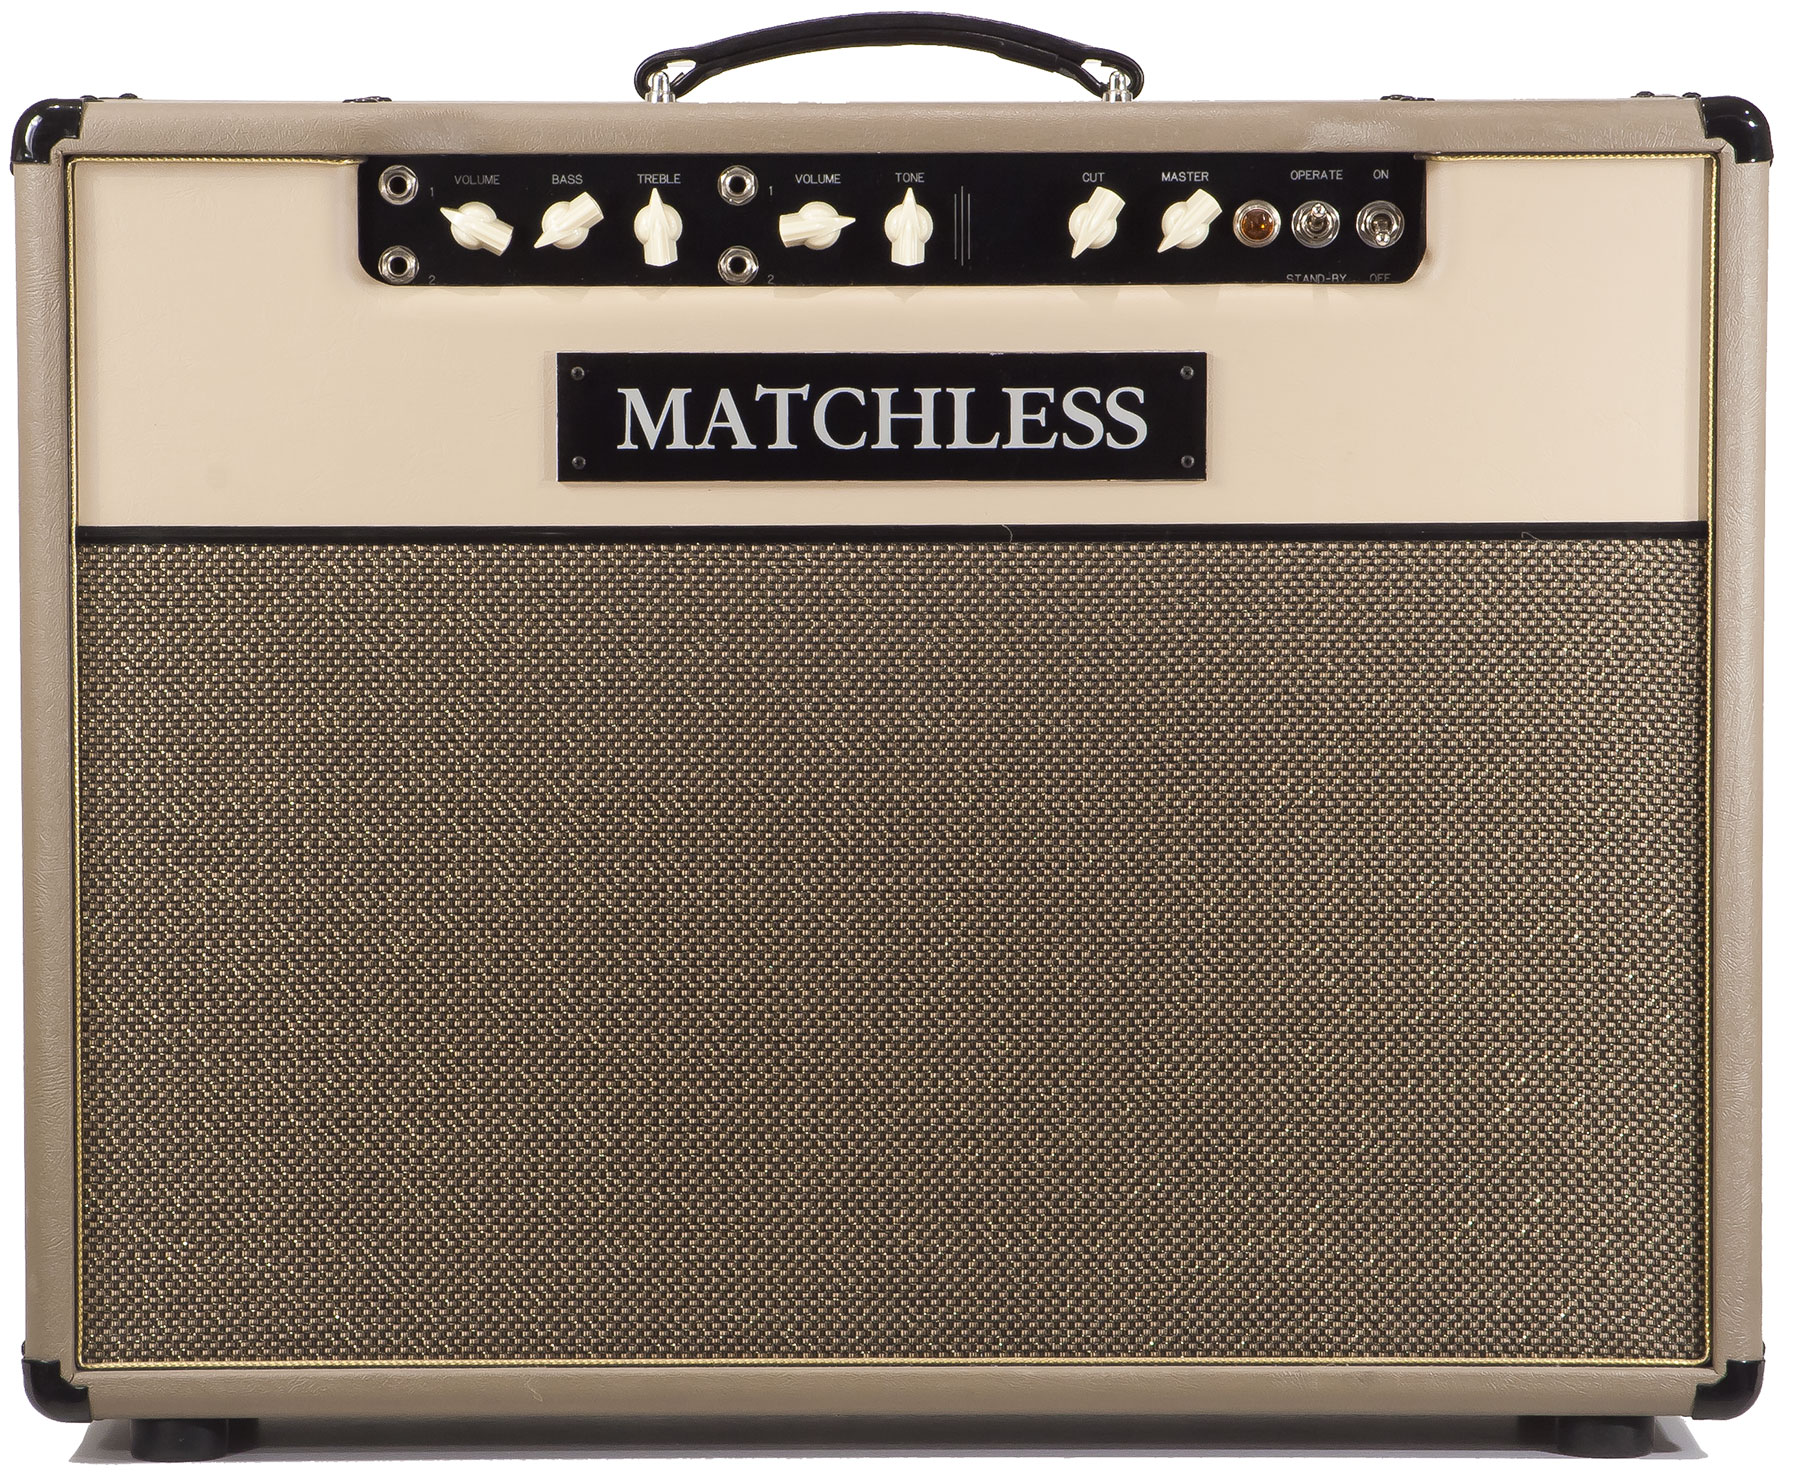 Matchless Dc-30 30w 2x12 Cappuccino/gold - Combo amplificador para guitarra eléctrica - Variation 1